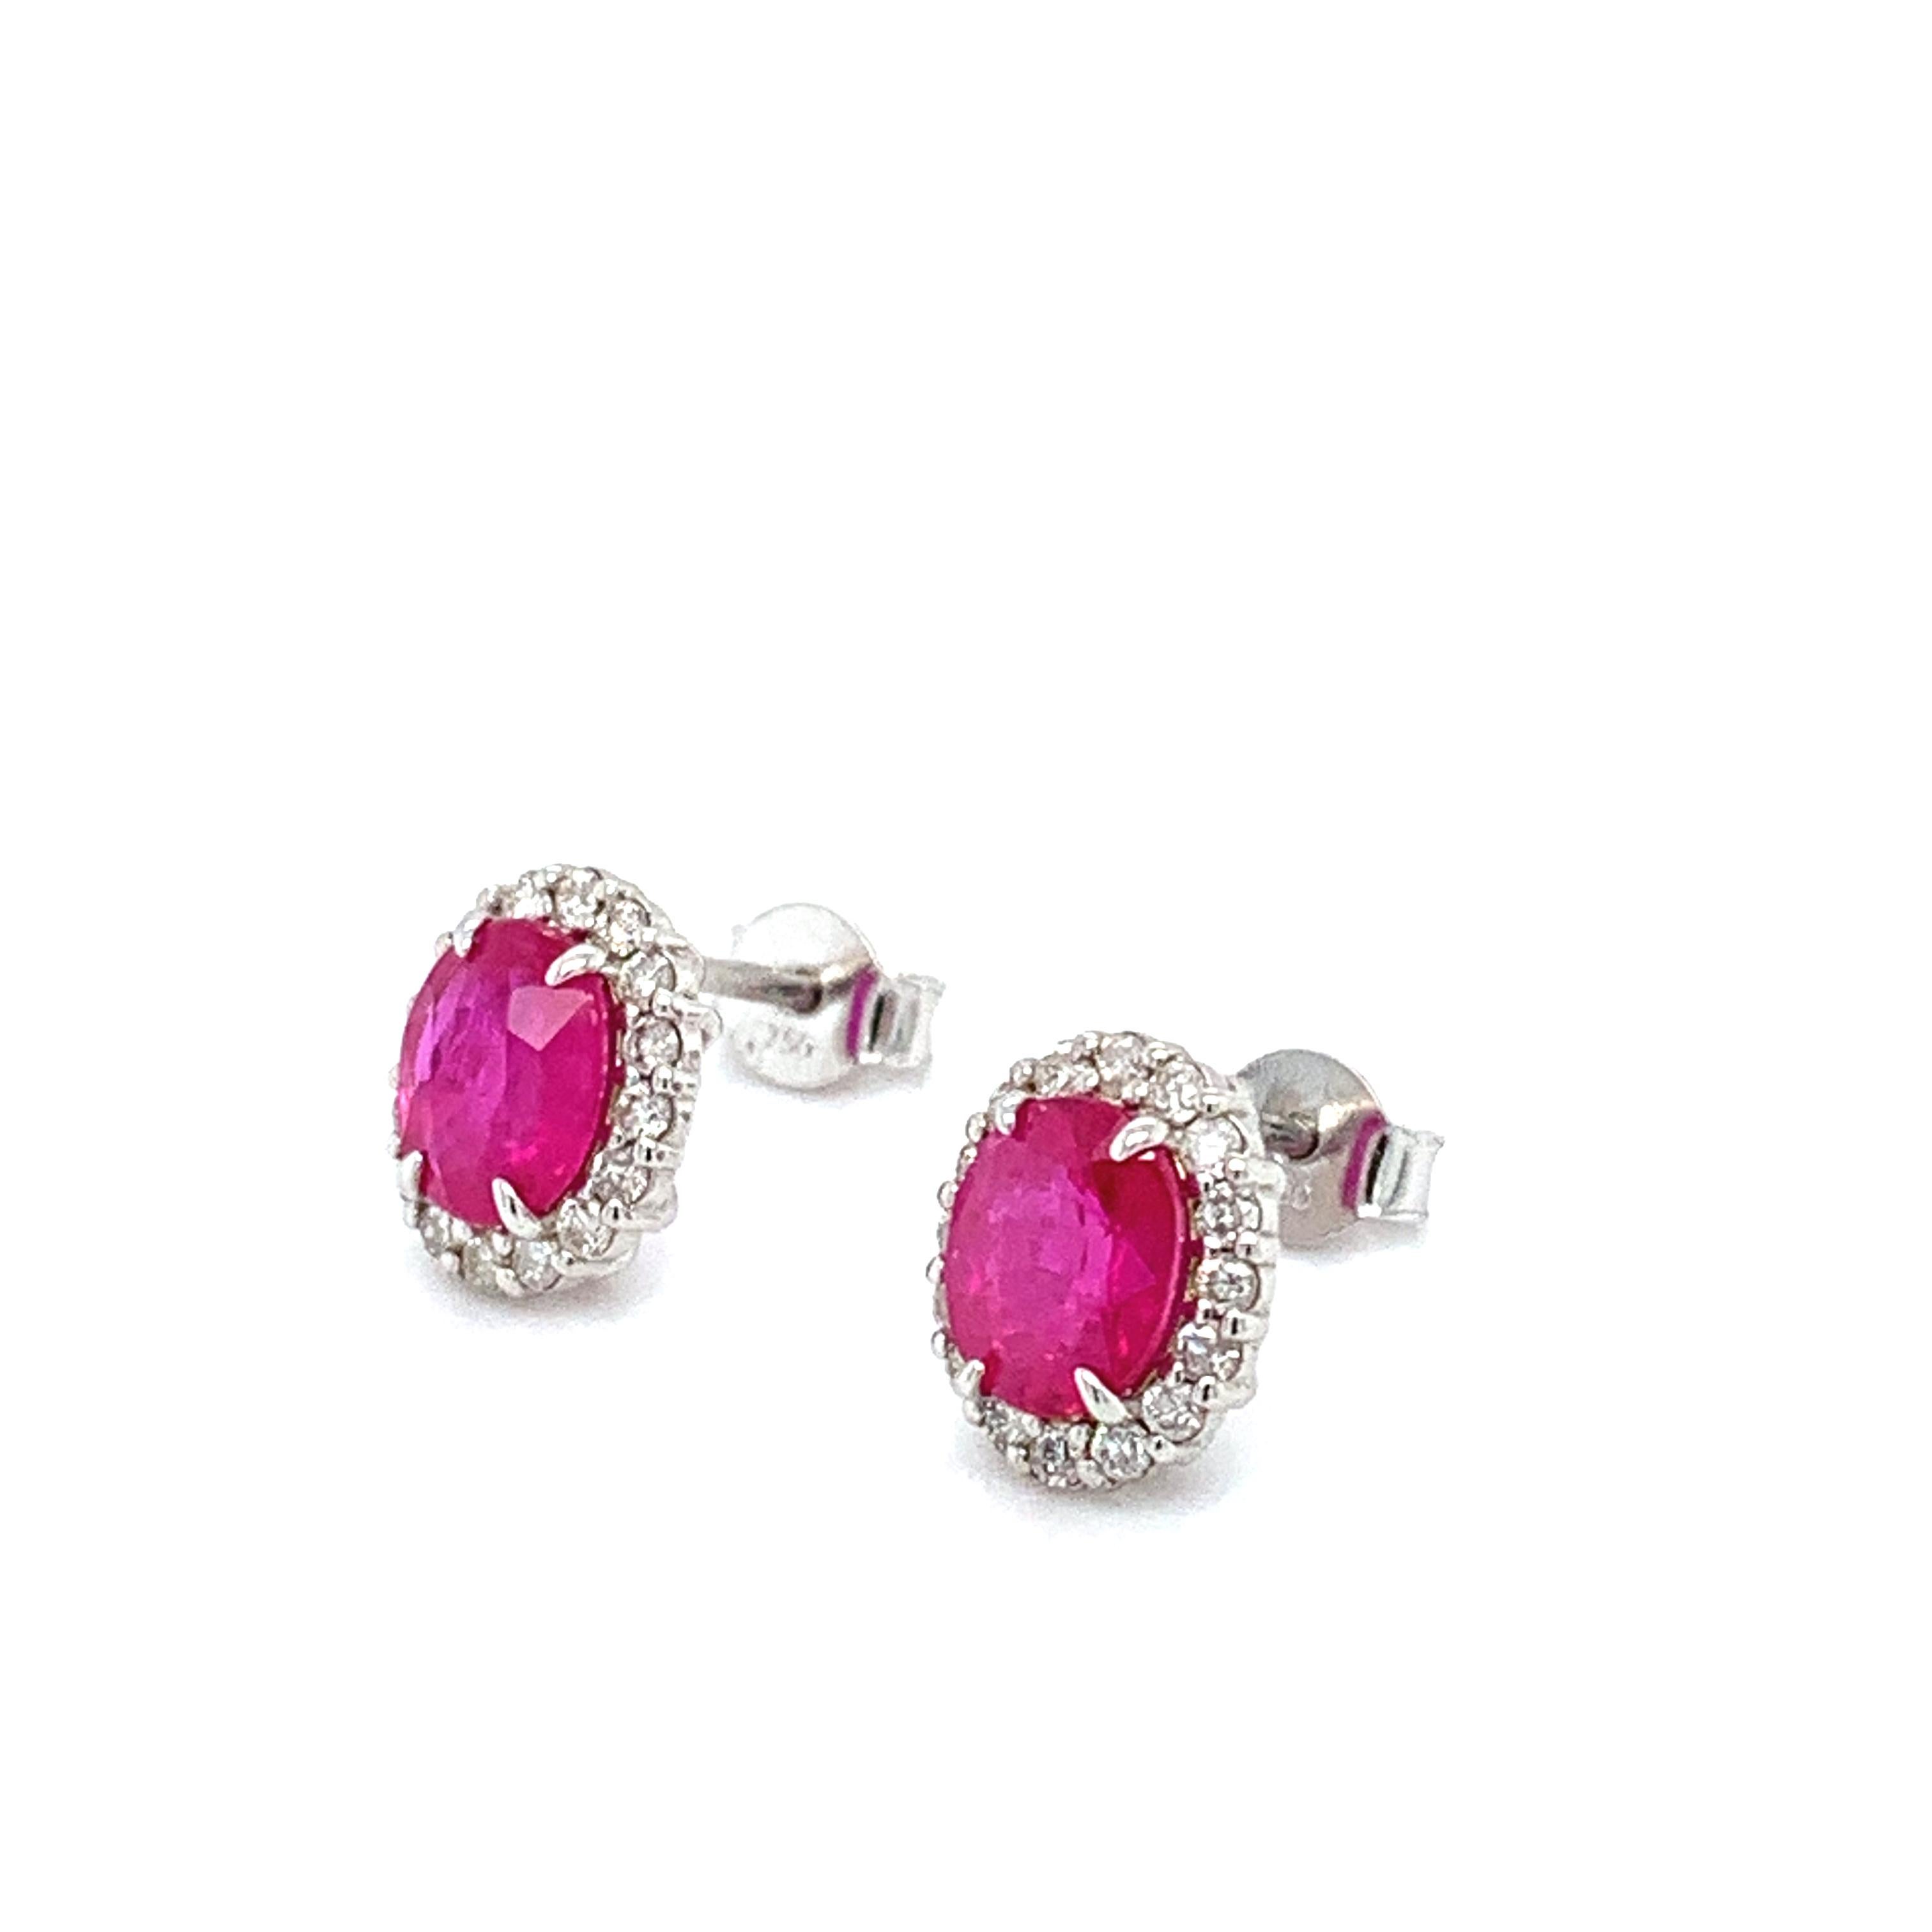 Oval Cut Ruby diamond halo art deco studs earrings 18k white gold For Sale